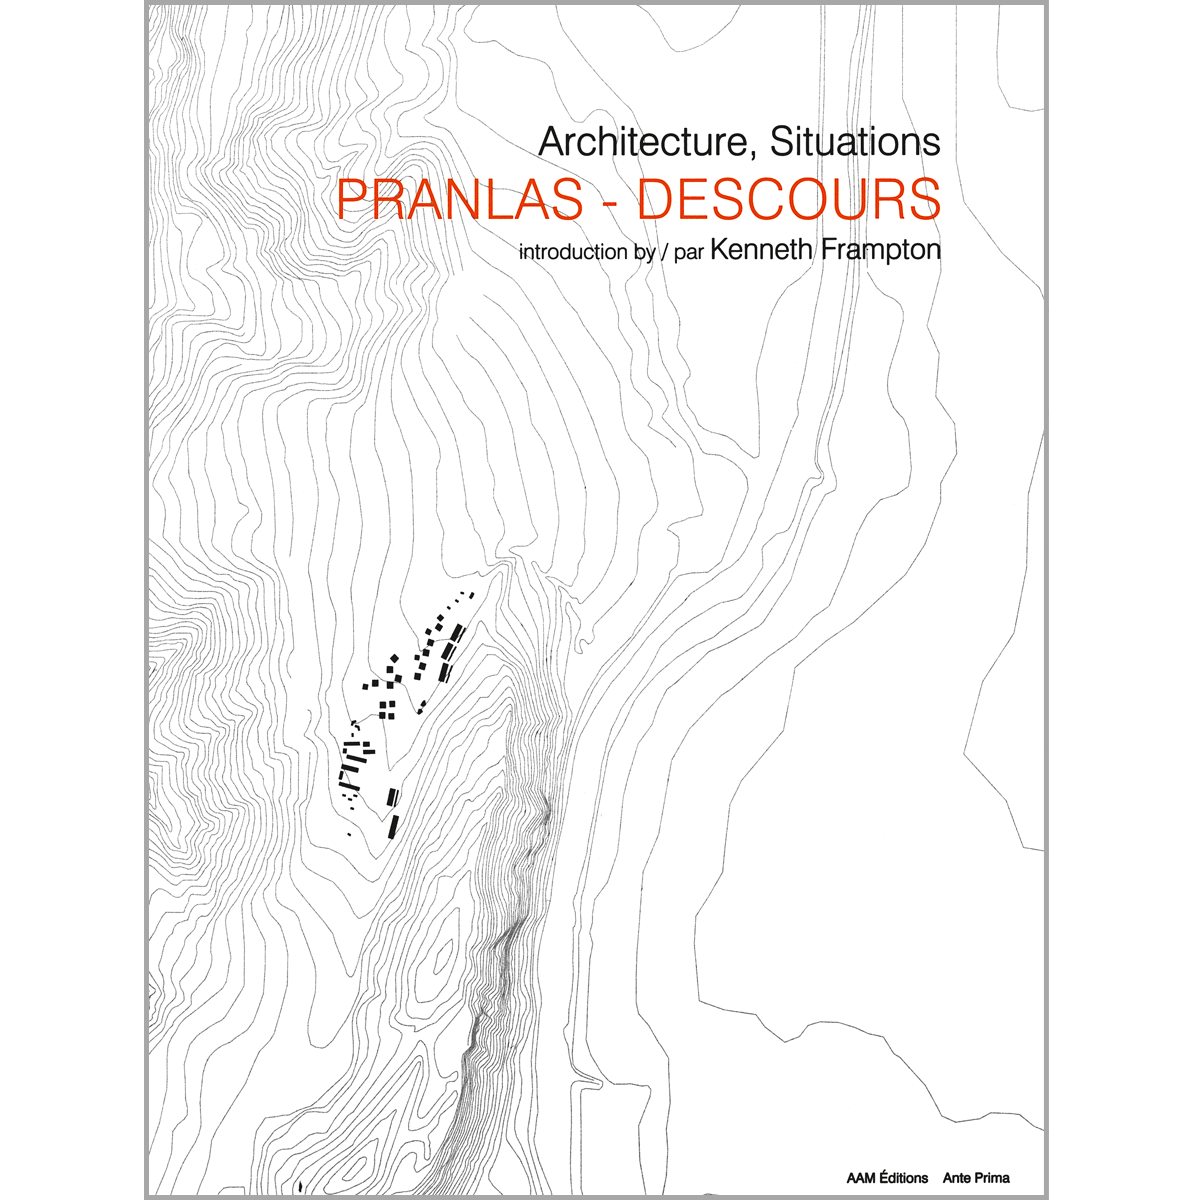 Pranlas-Descours